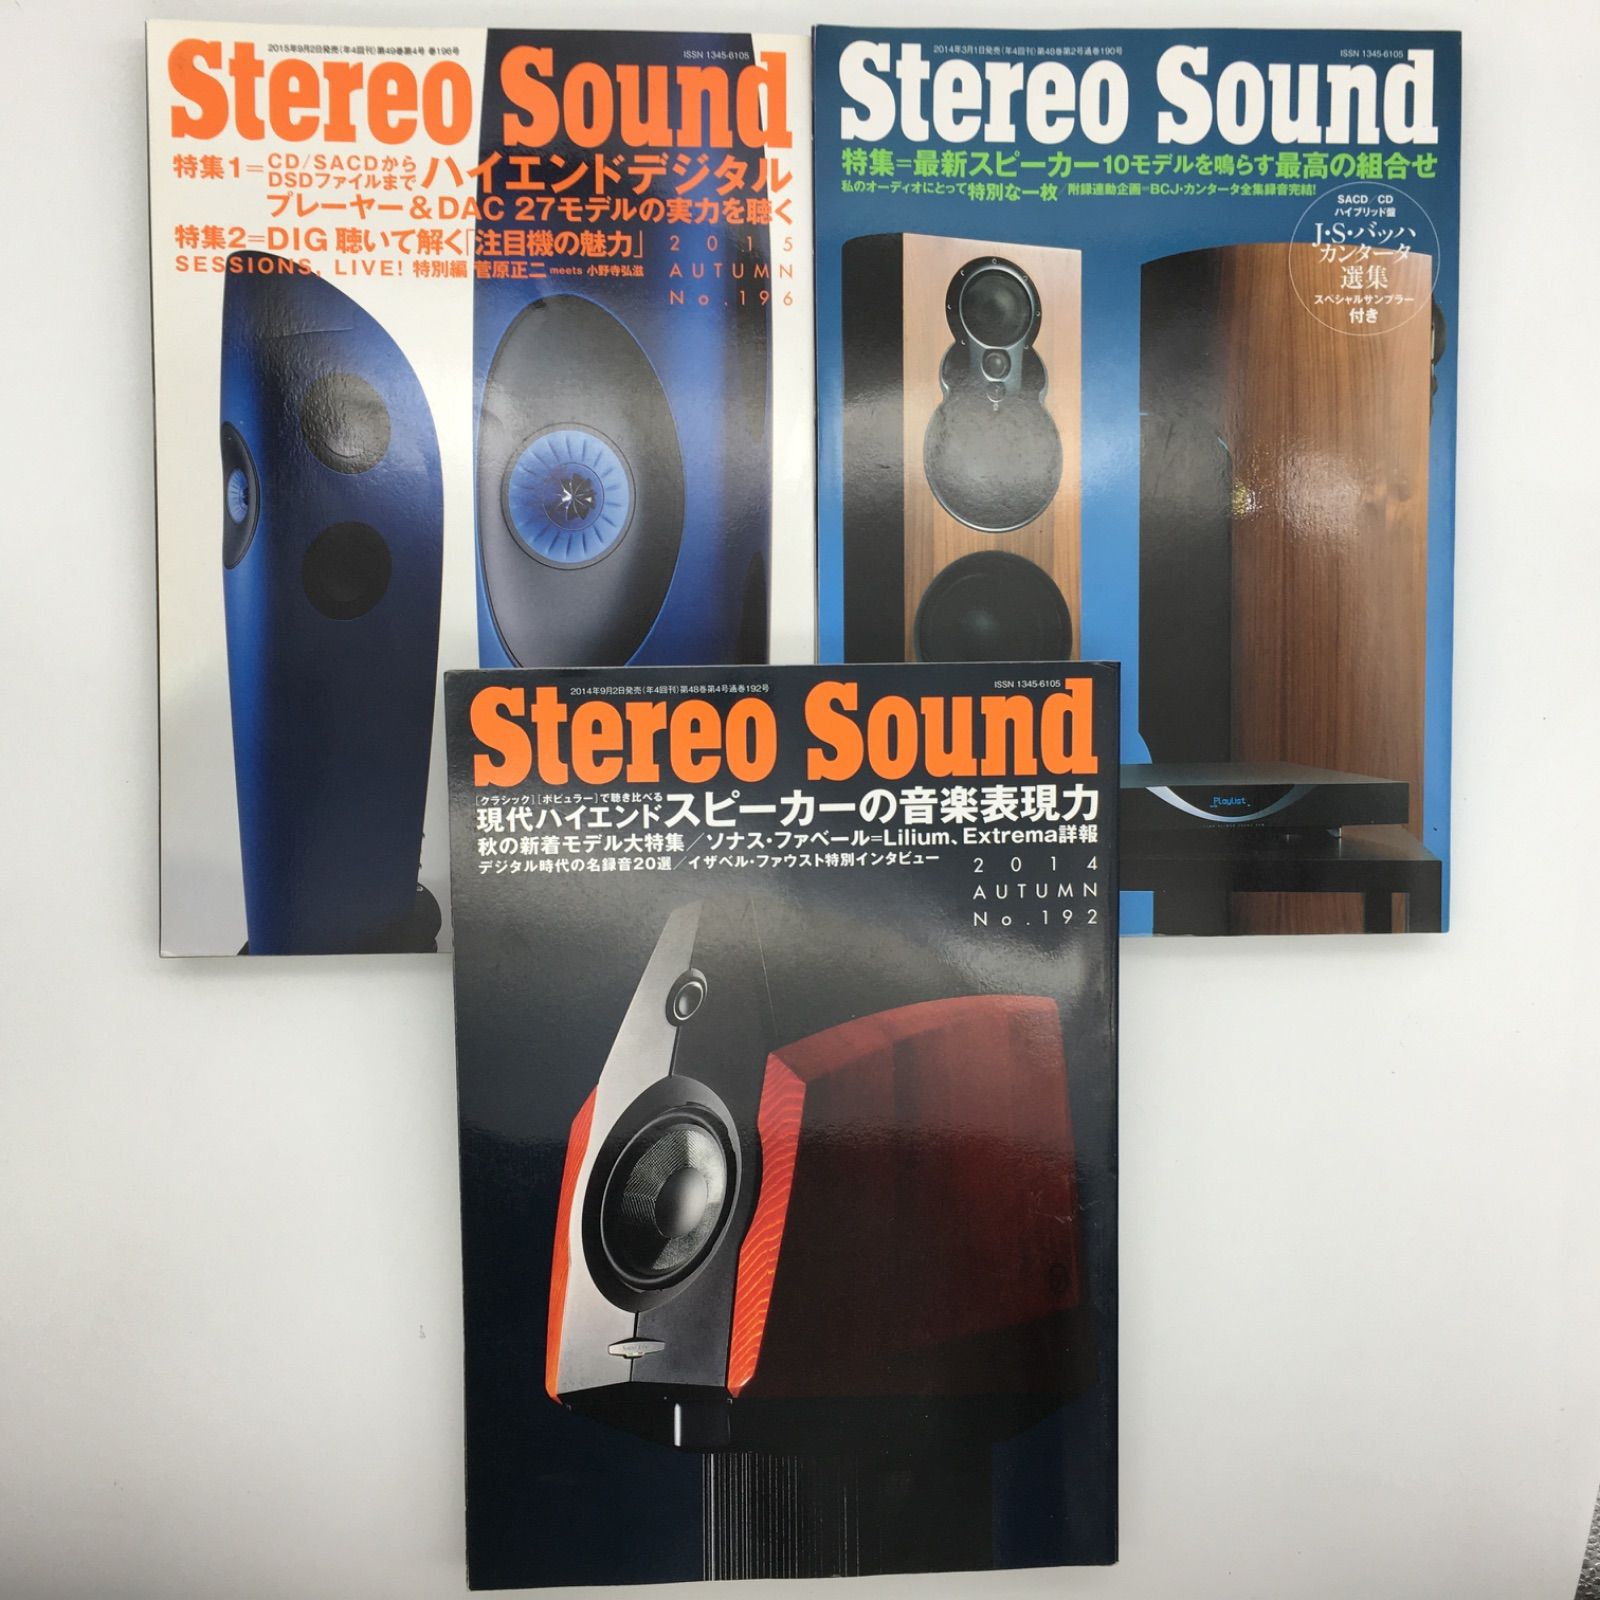 Stereo Sound ステレオサウンド 7冊セット 雑誌 - メルカリShops